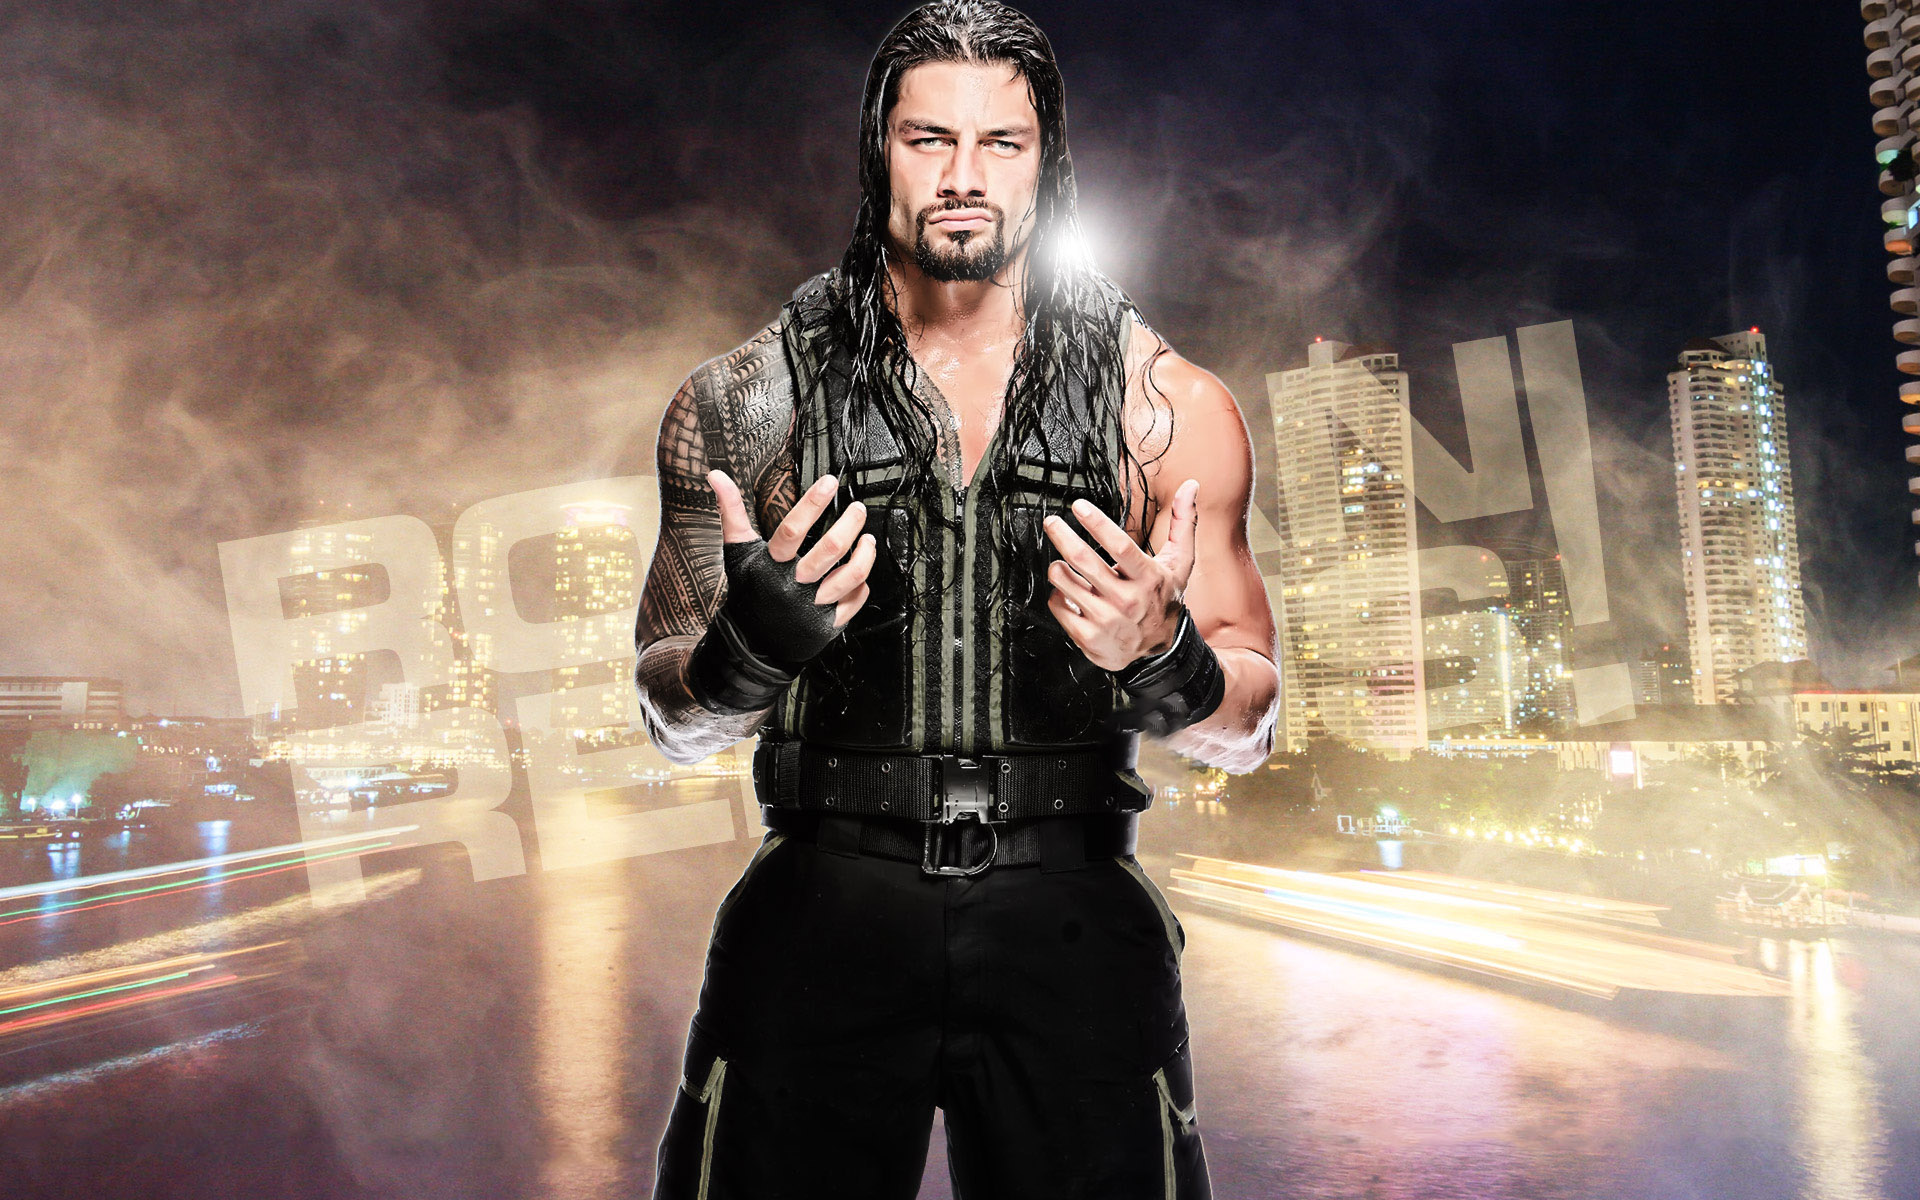 Download WWE Roman Reigns 2016 Wallpapers for Desktop | Most HD ...